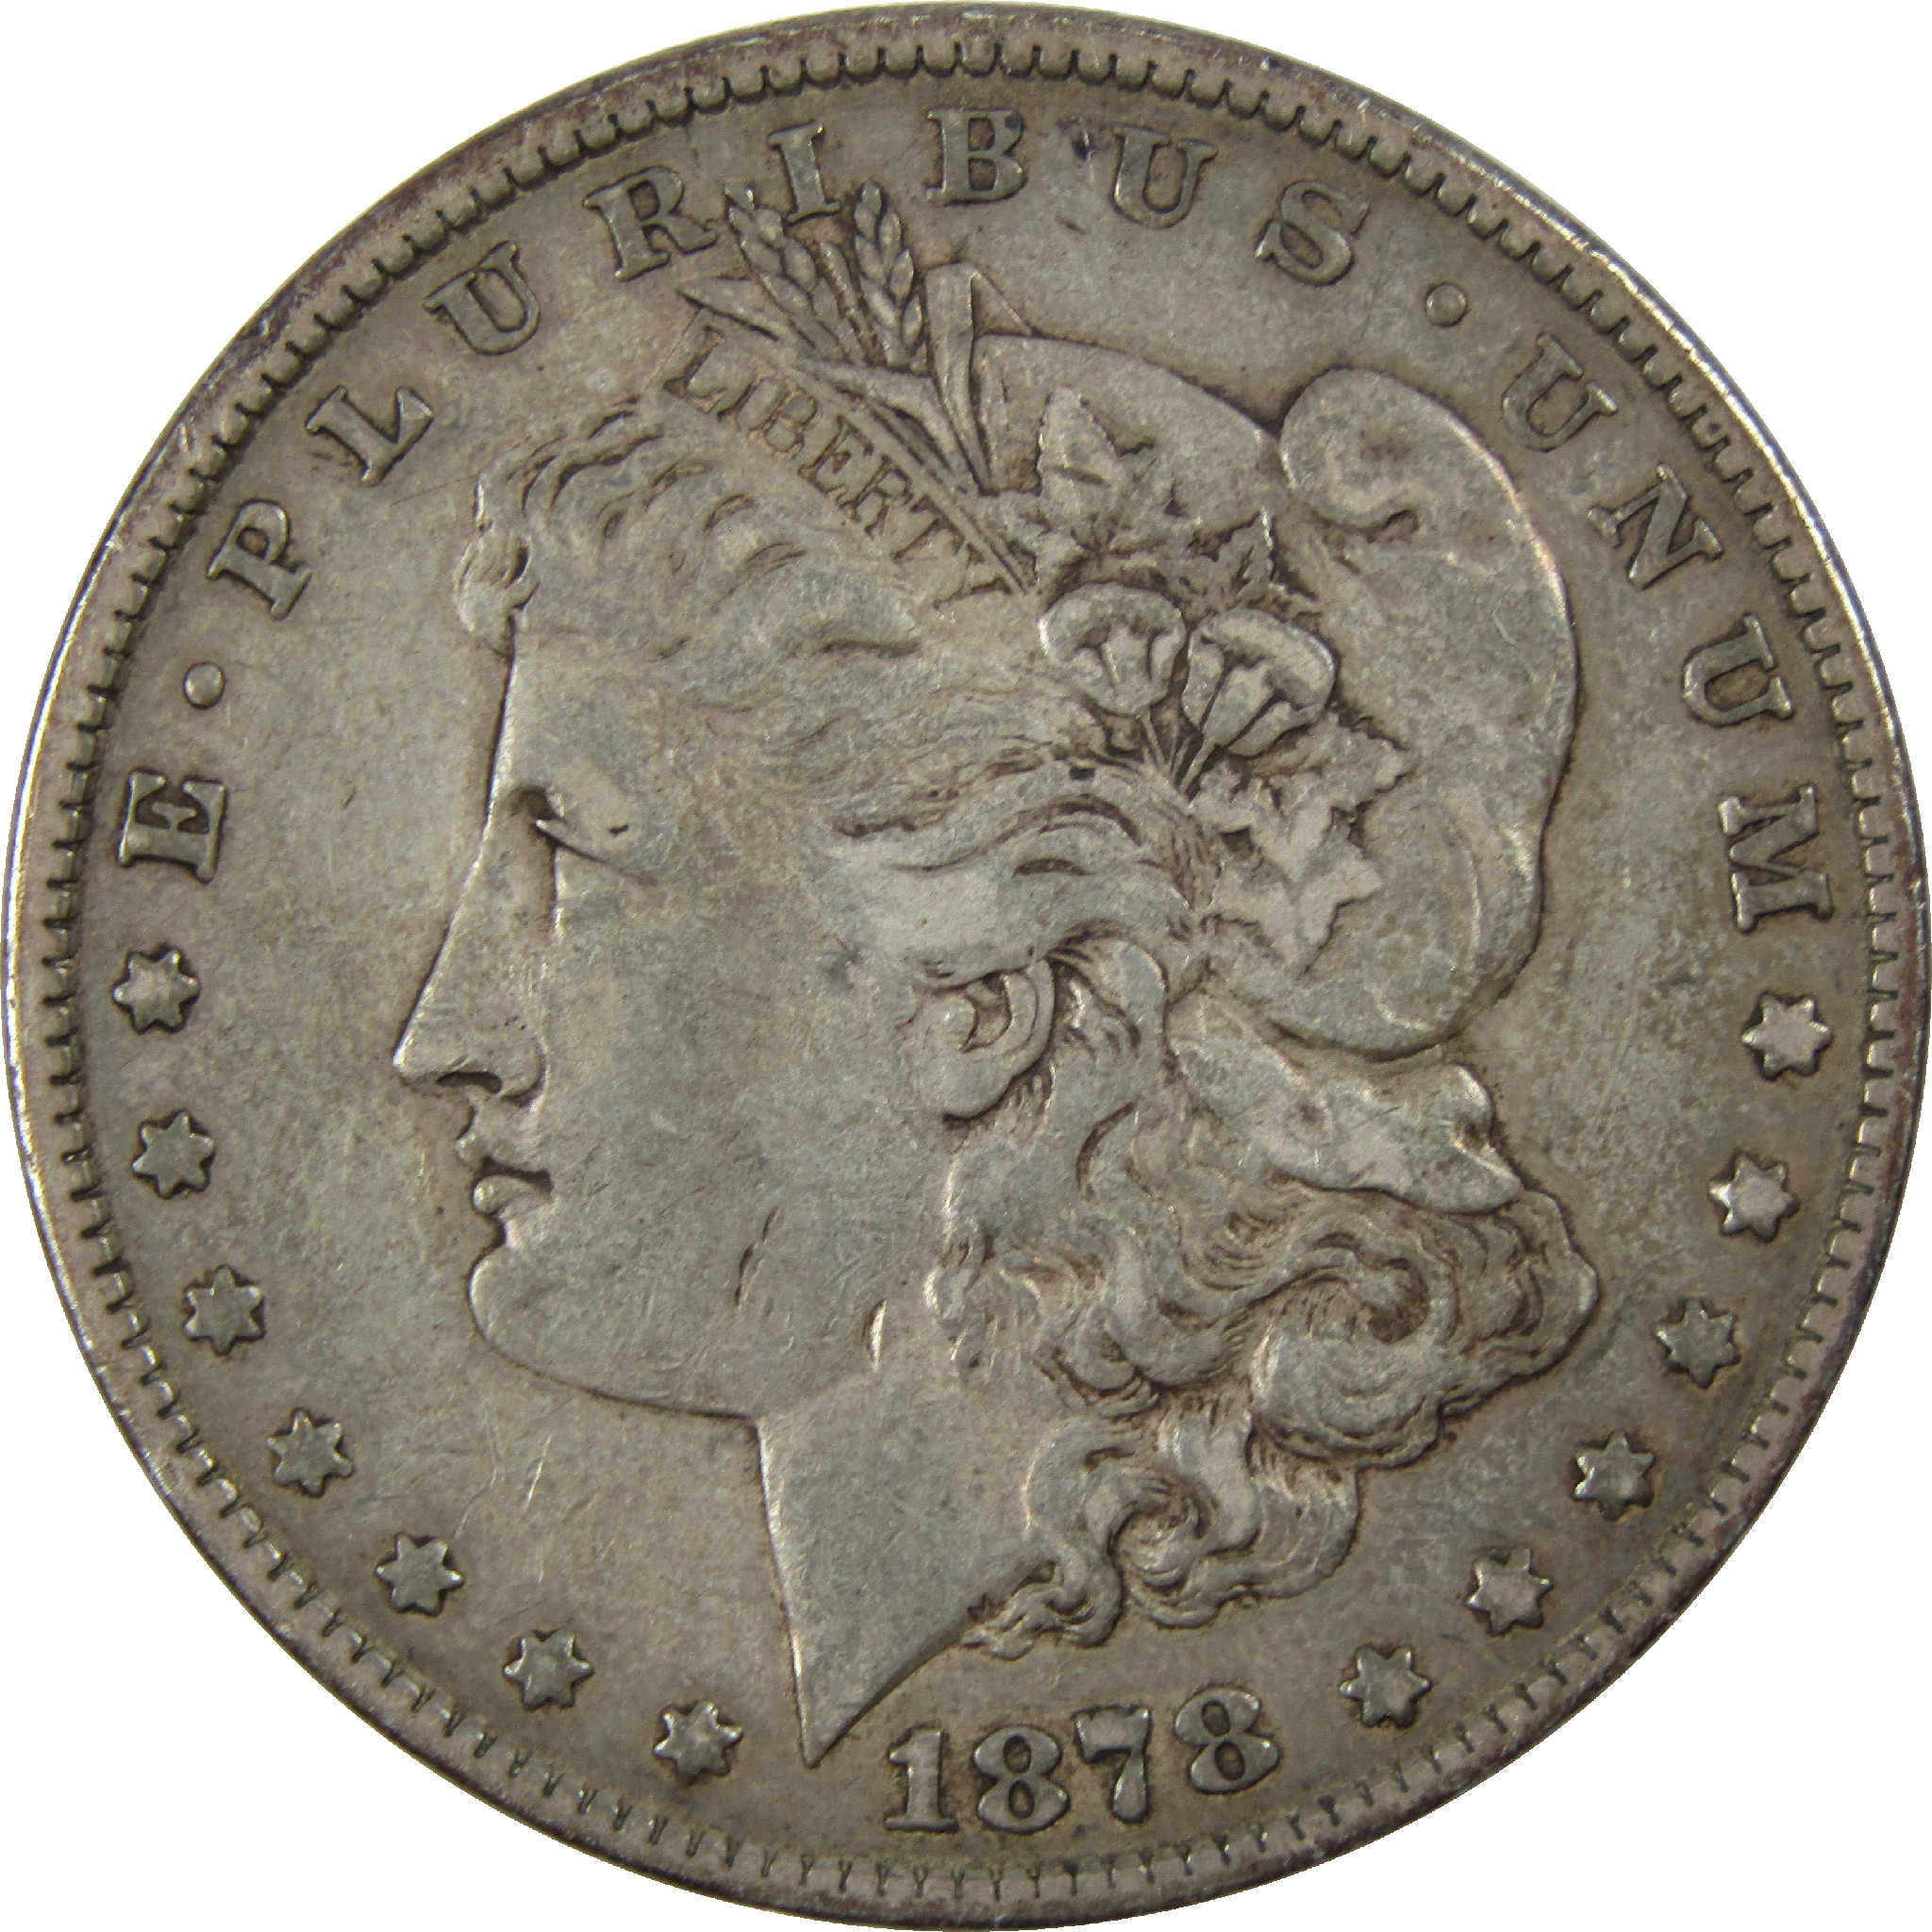 1878 7TF Rev 79 Morgan Dollar VF Very Fine Silver $1 Coin SKU:I12173 - Morgan coin - Morgan silver dollar - Morgan silver dollar for sale - Profile Coins &amp; Collectibles